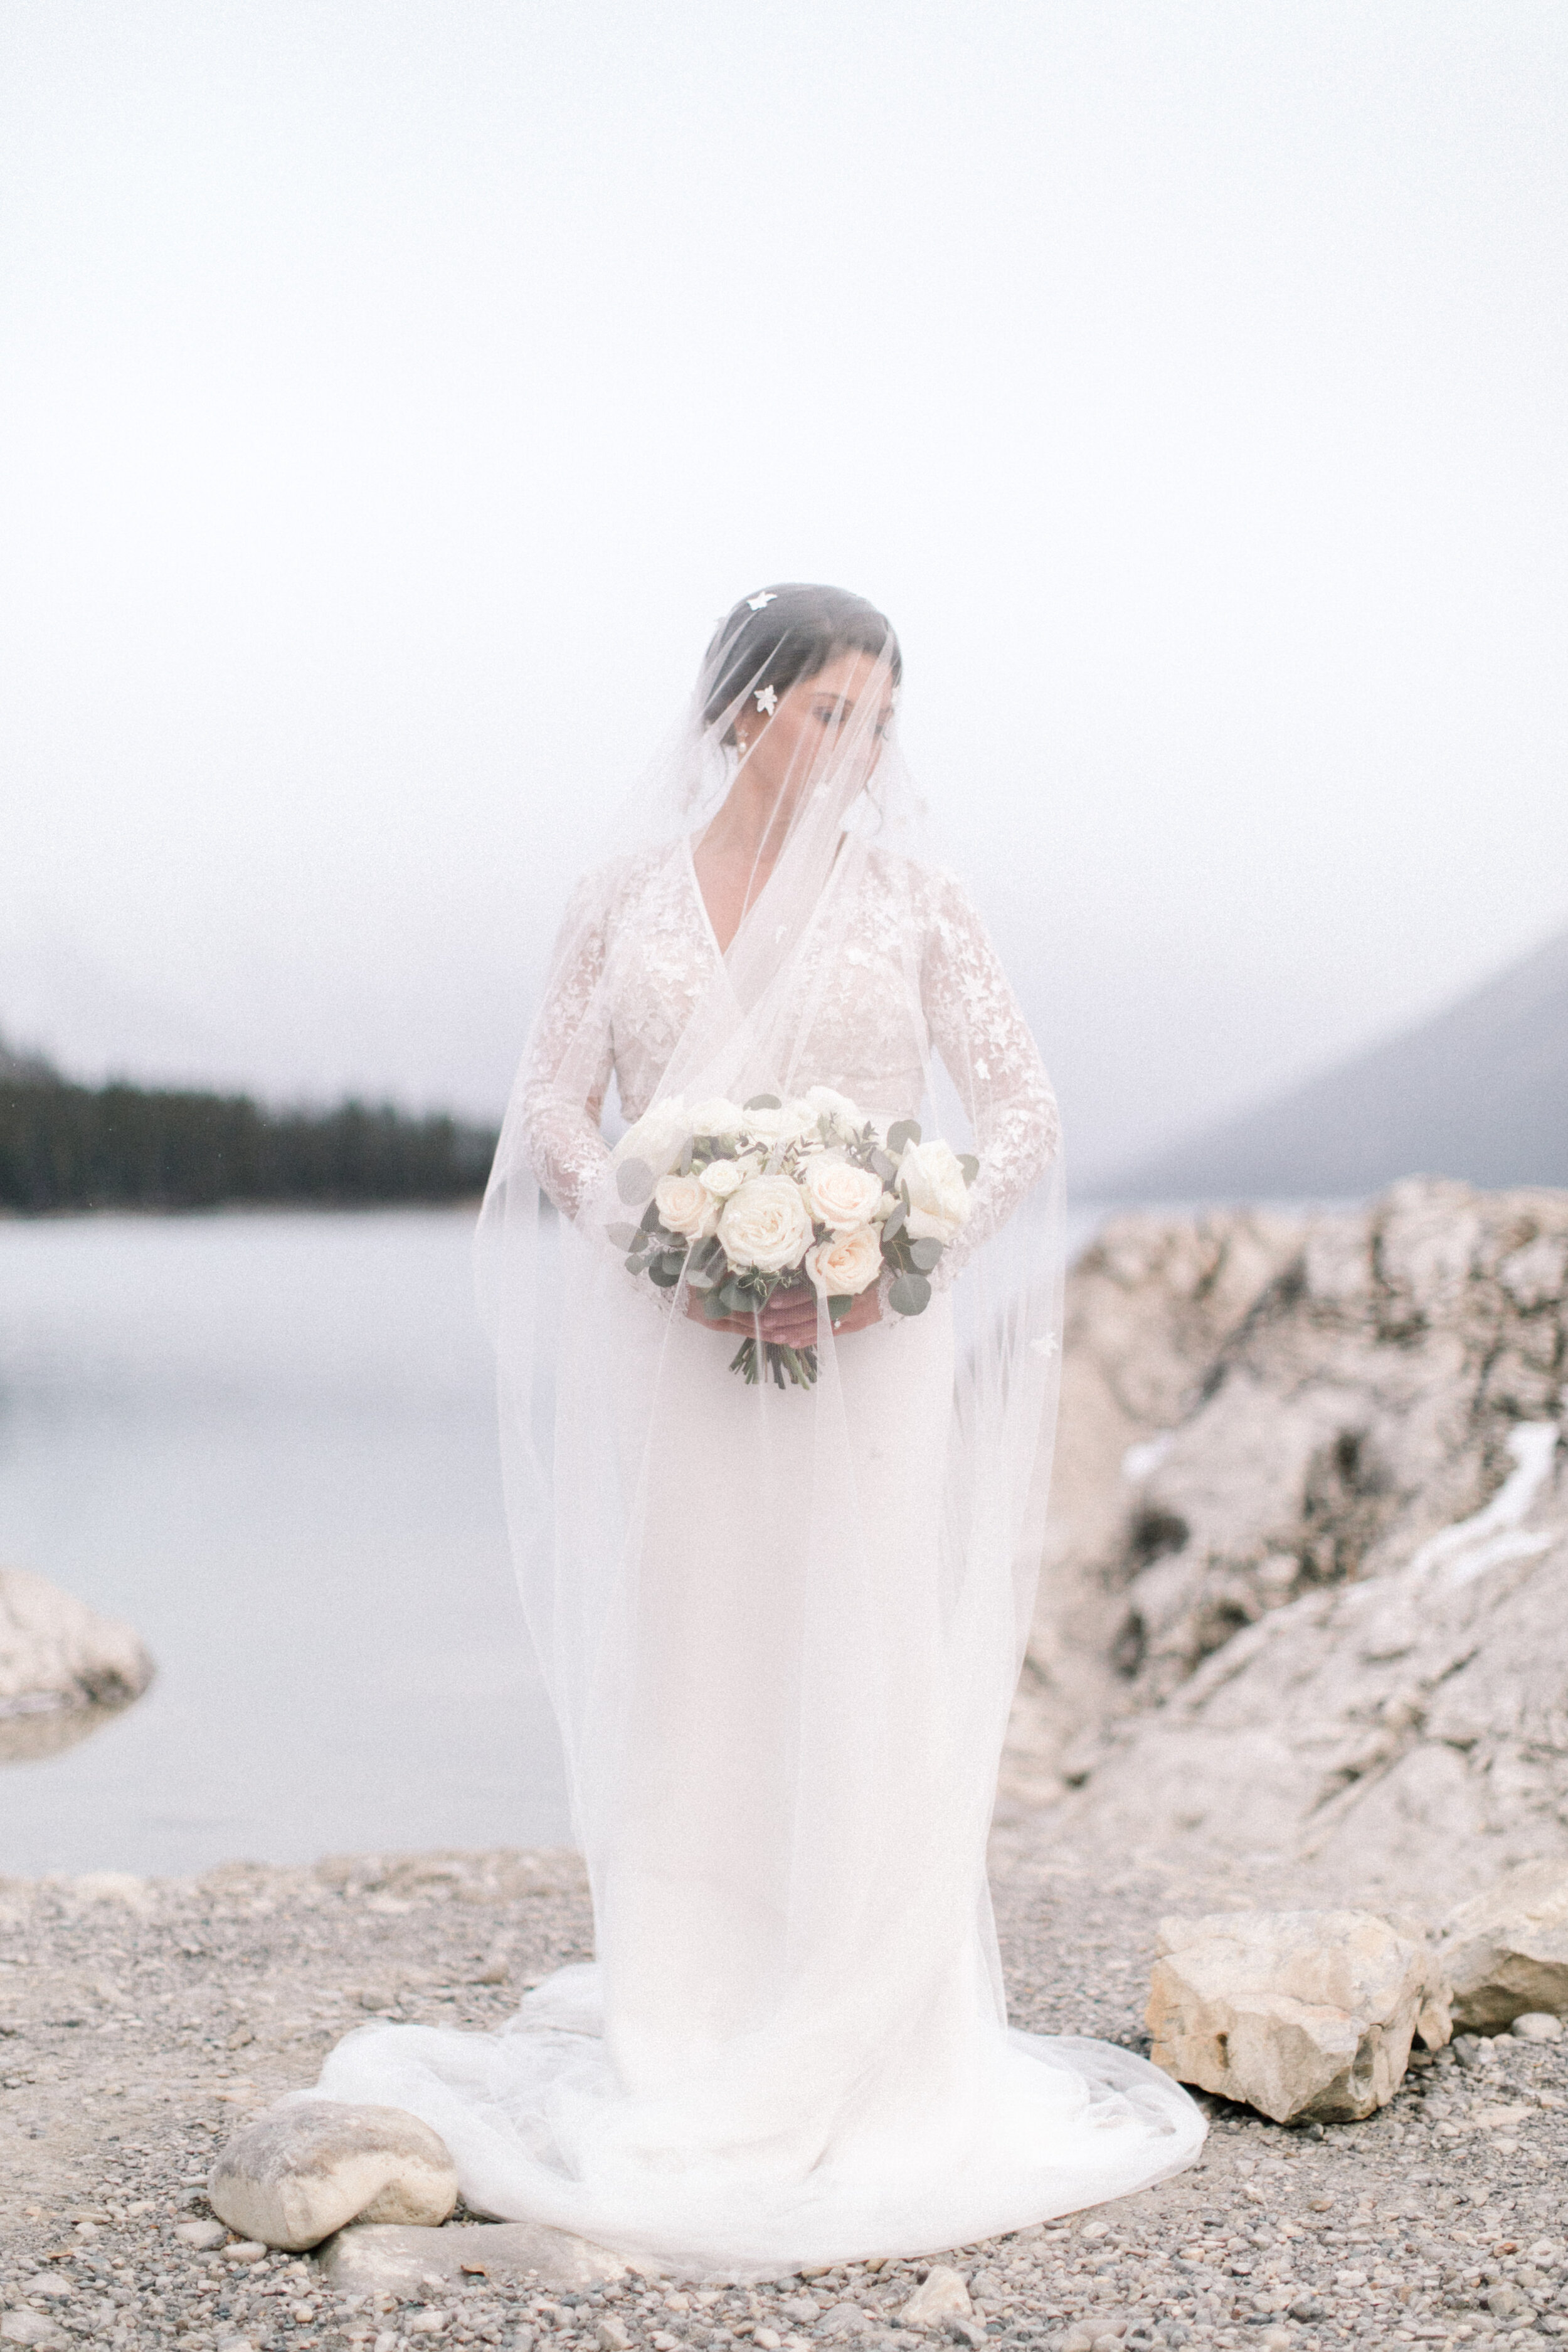 A Winter Mountain Wedding at Banff Springs Hotel // Torsten & Nina - on the Bronte Bride Blog